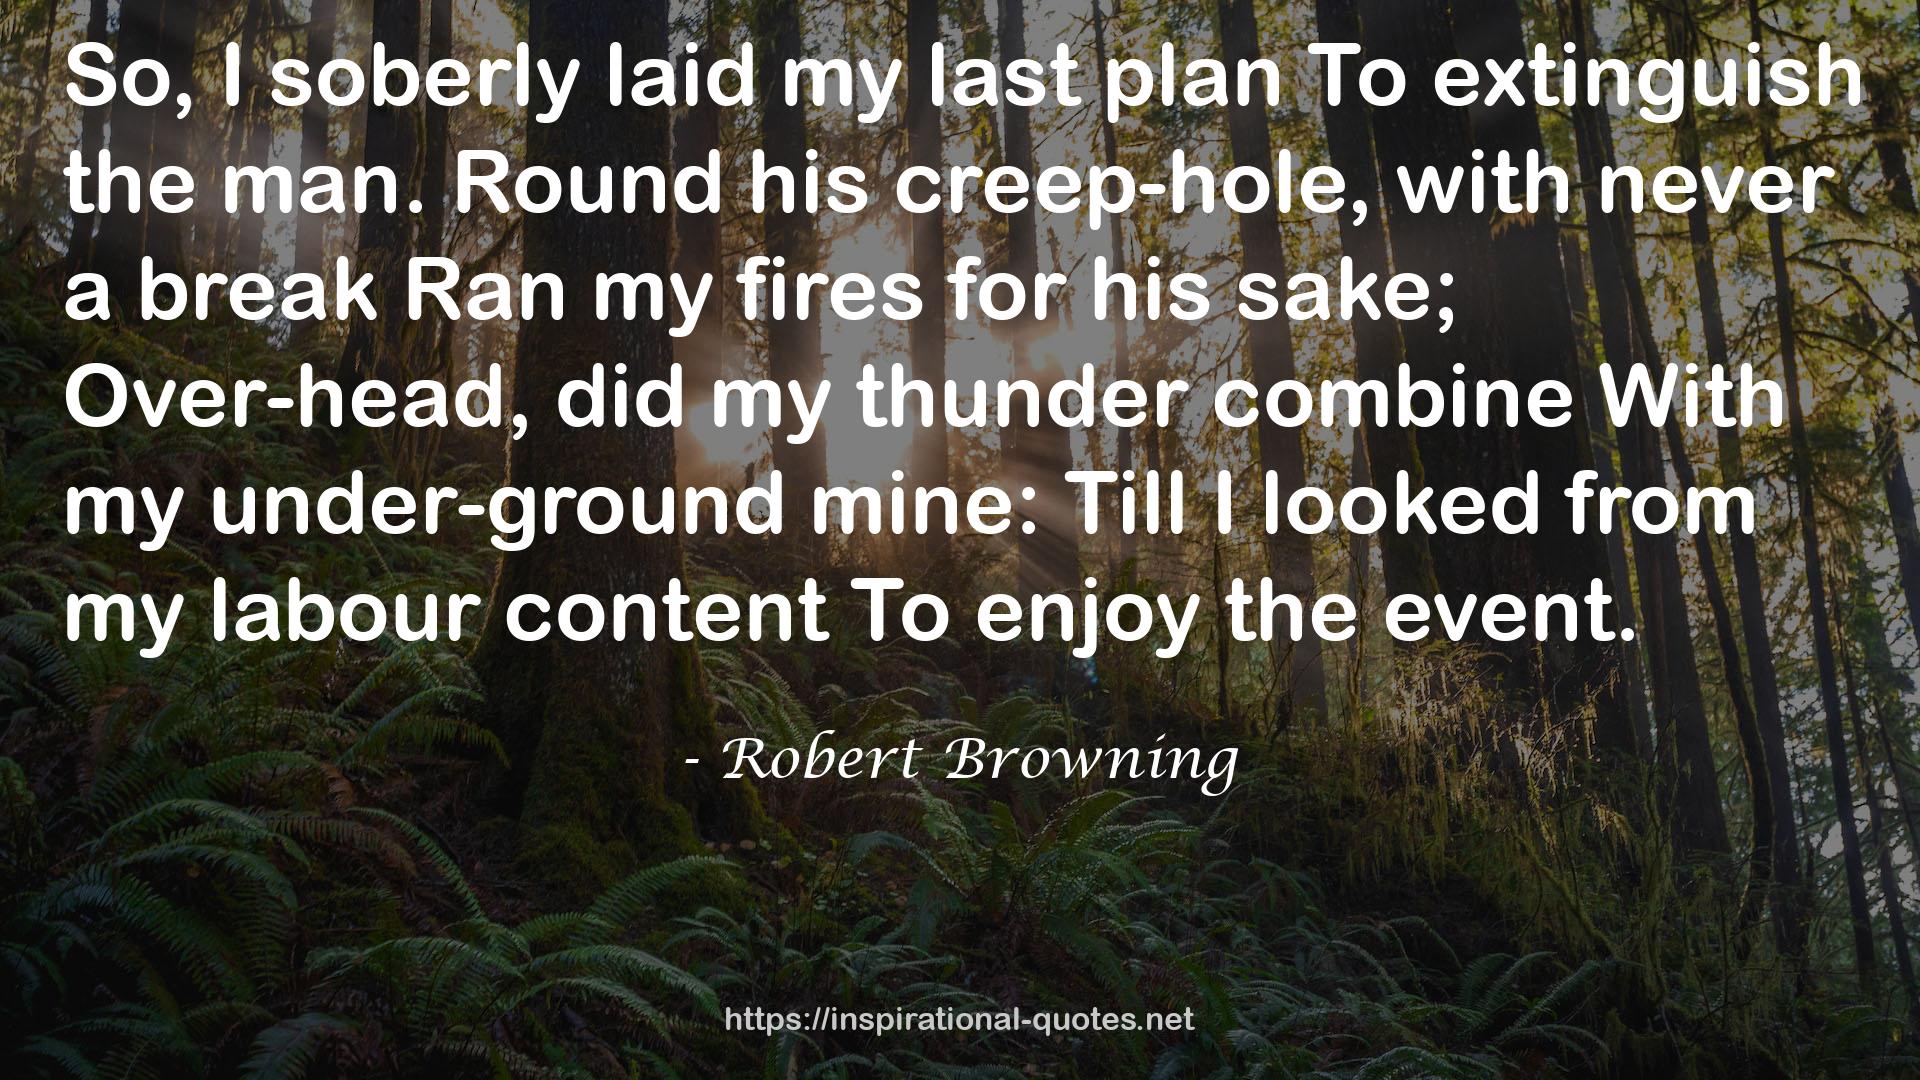 Robert Browning QUOTES